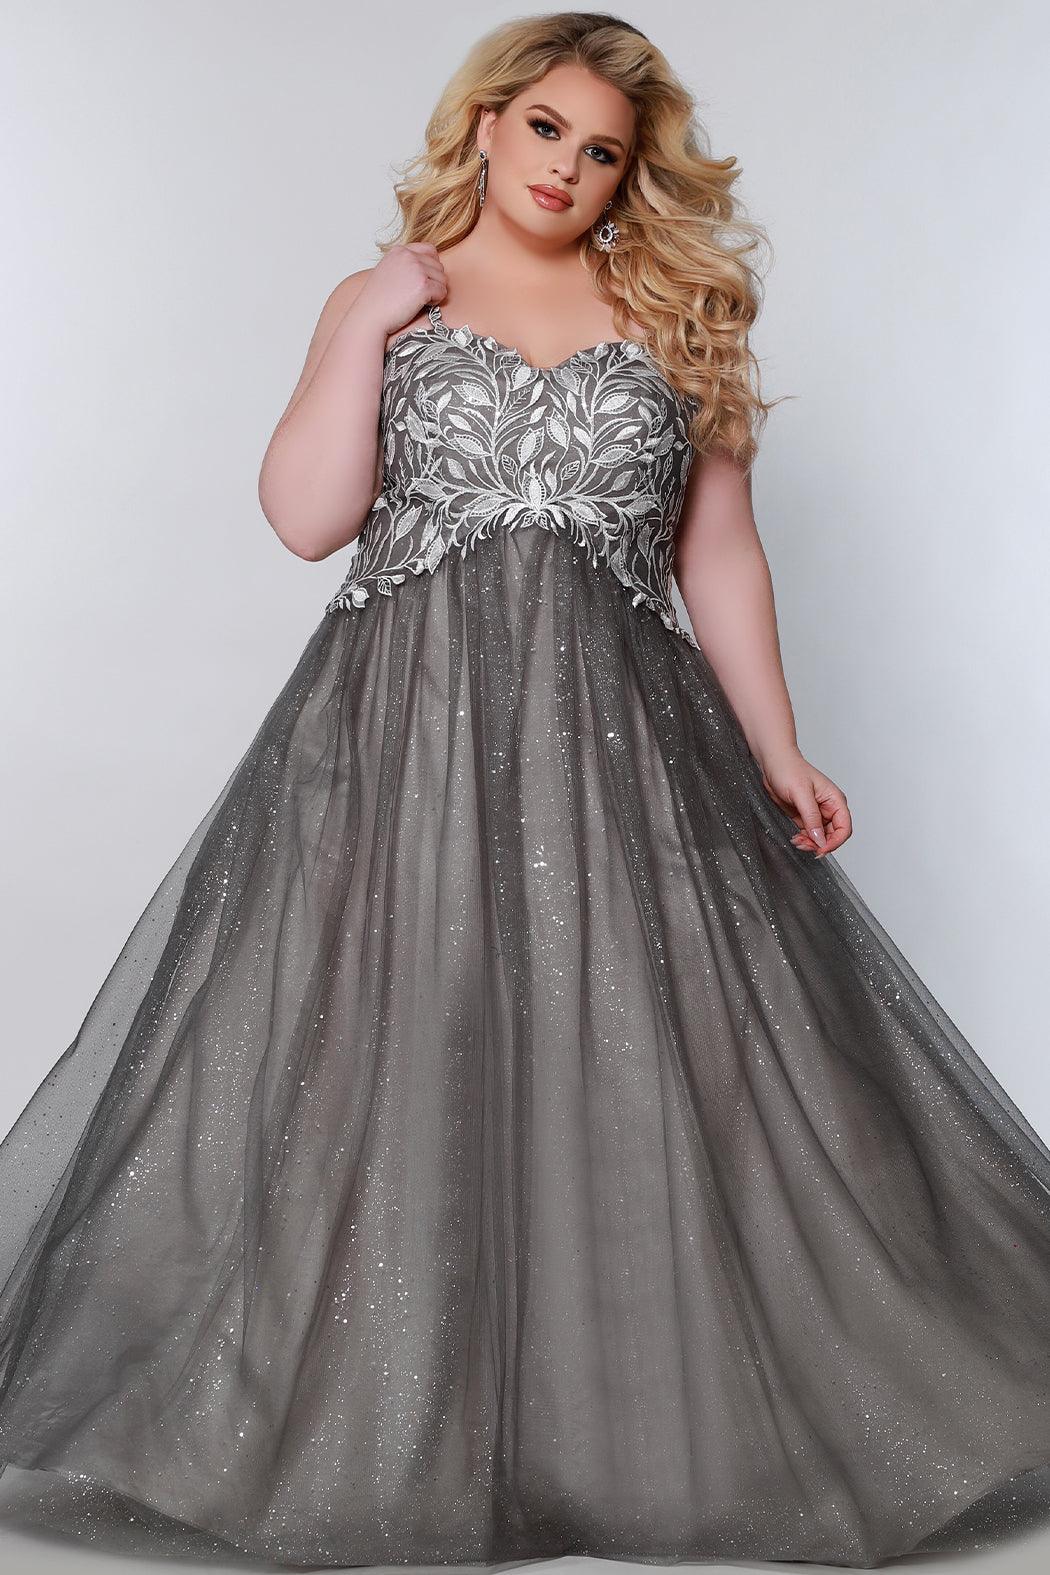 gray plus size dresses